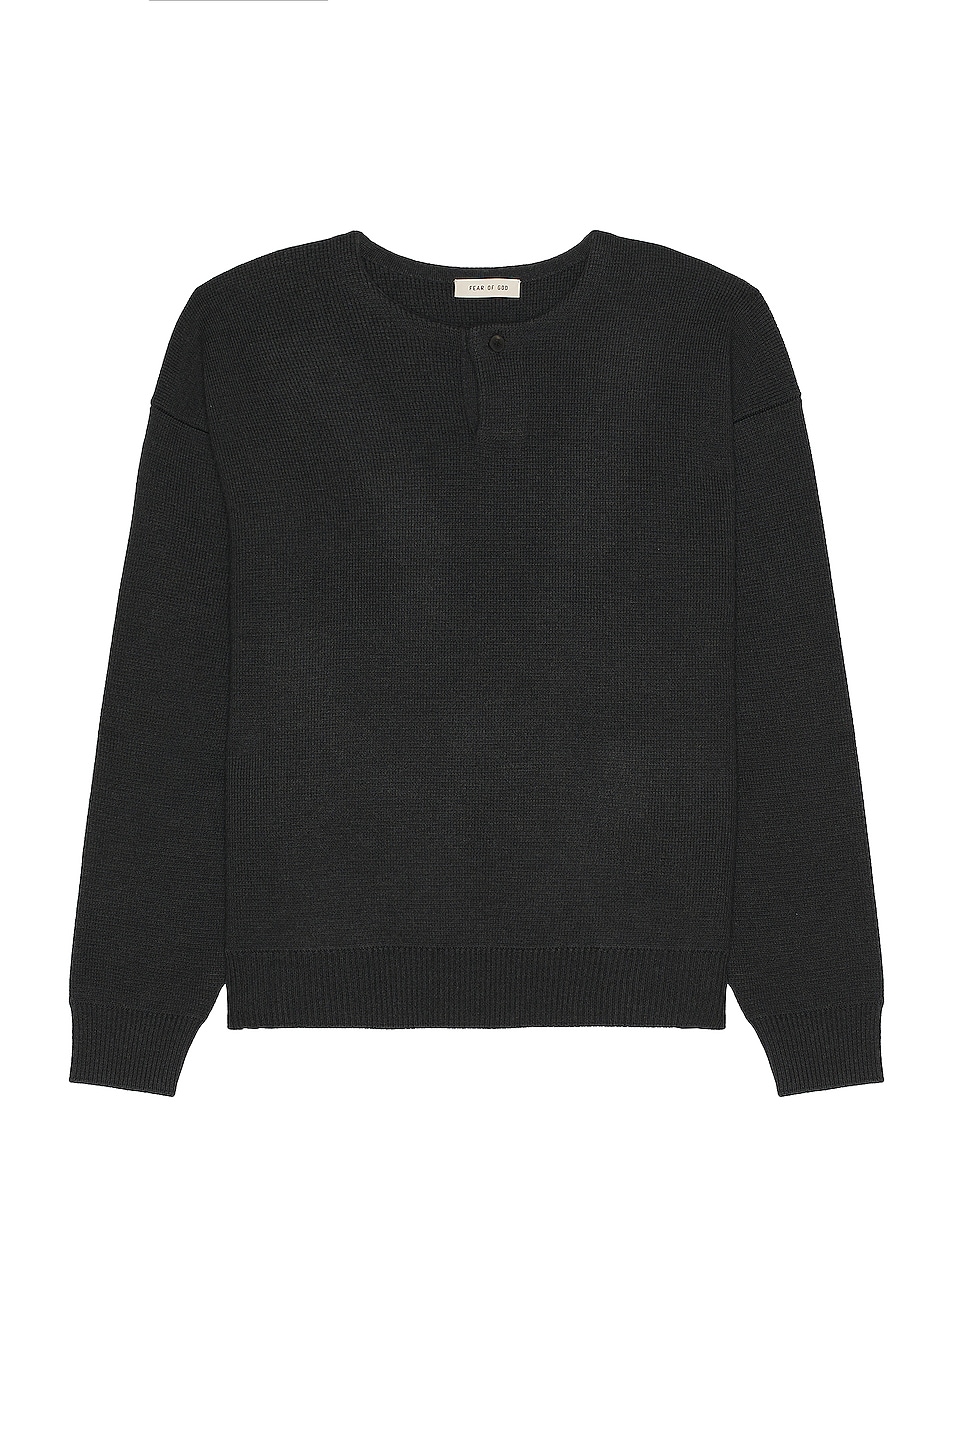 Image 1 of Fear of God Eternal Henley Sweater in Black Heather